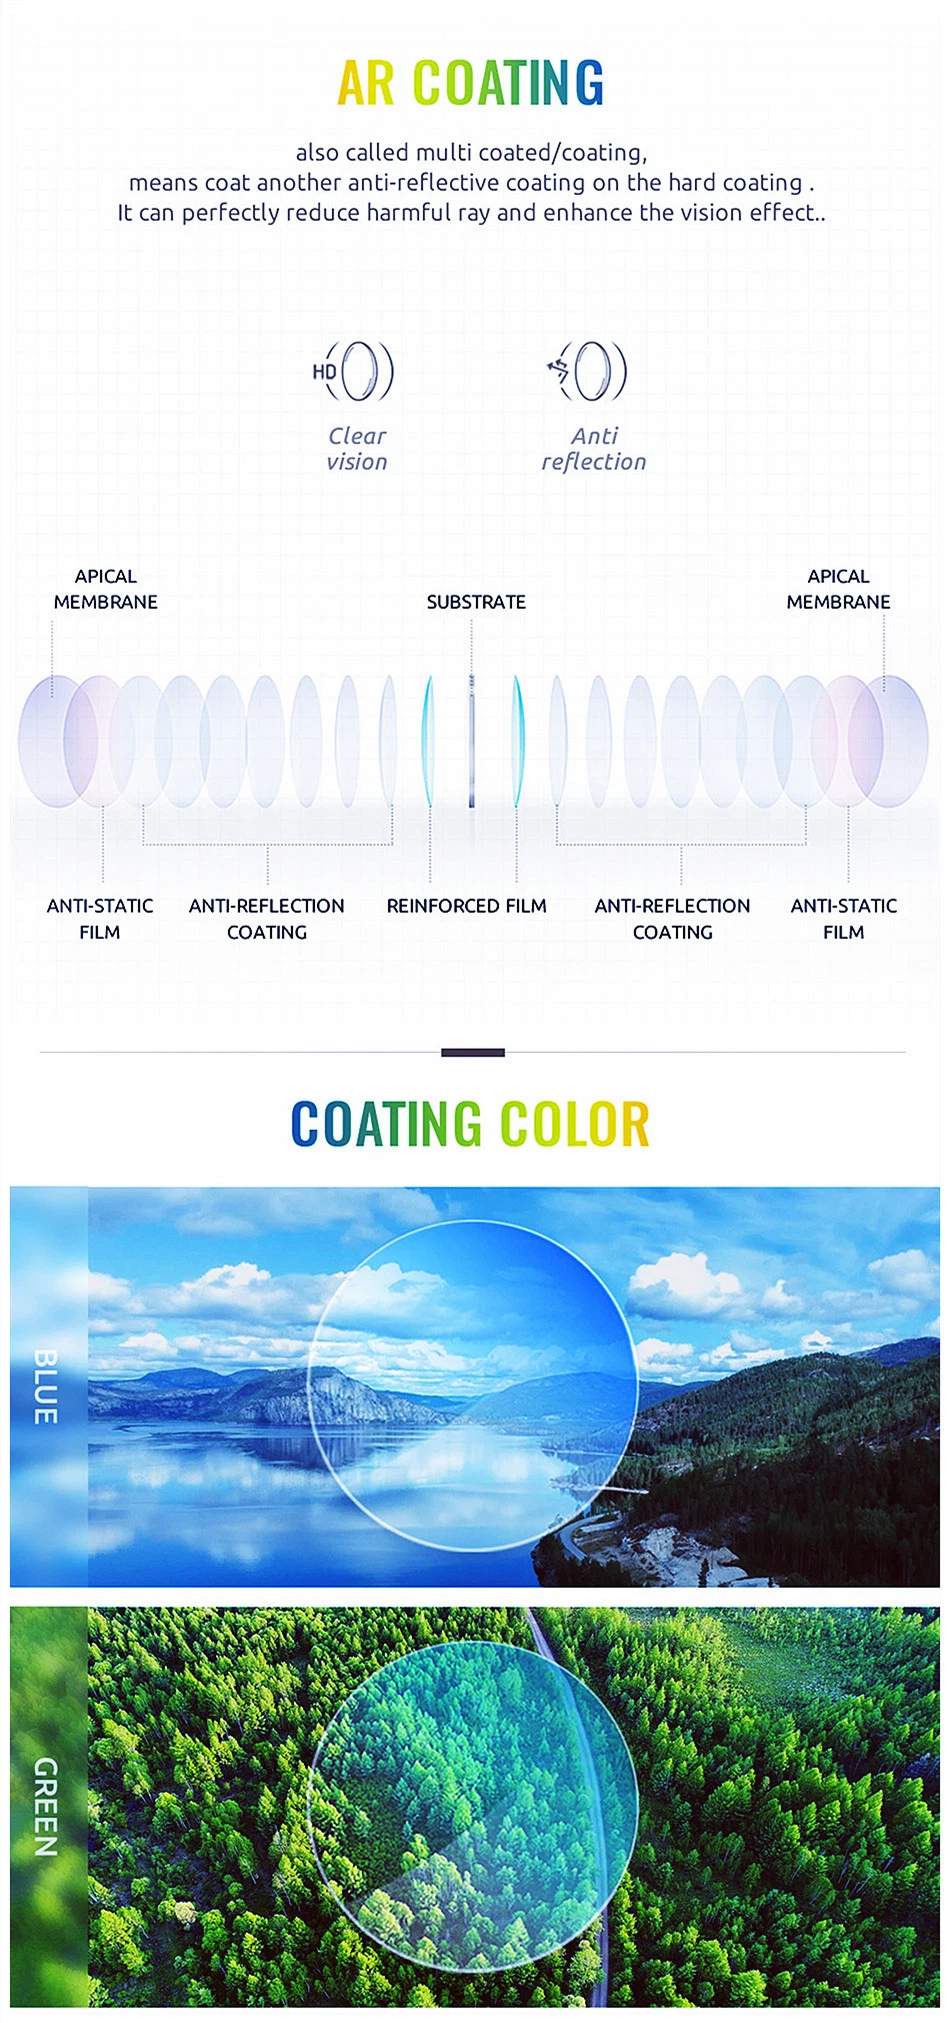 Ophthalmic Lenses Blue Cut Len Lentes Blue Block 1.56 Optical Lenses with Long Corridor Progressive Lens High Quality